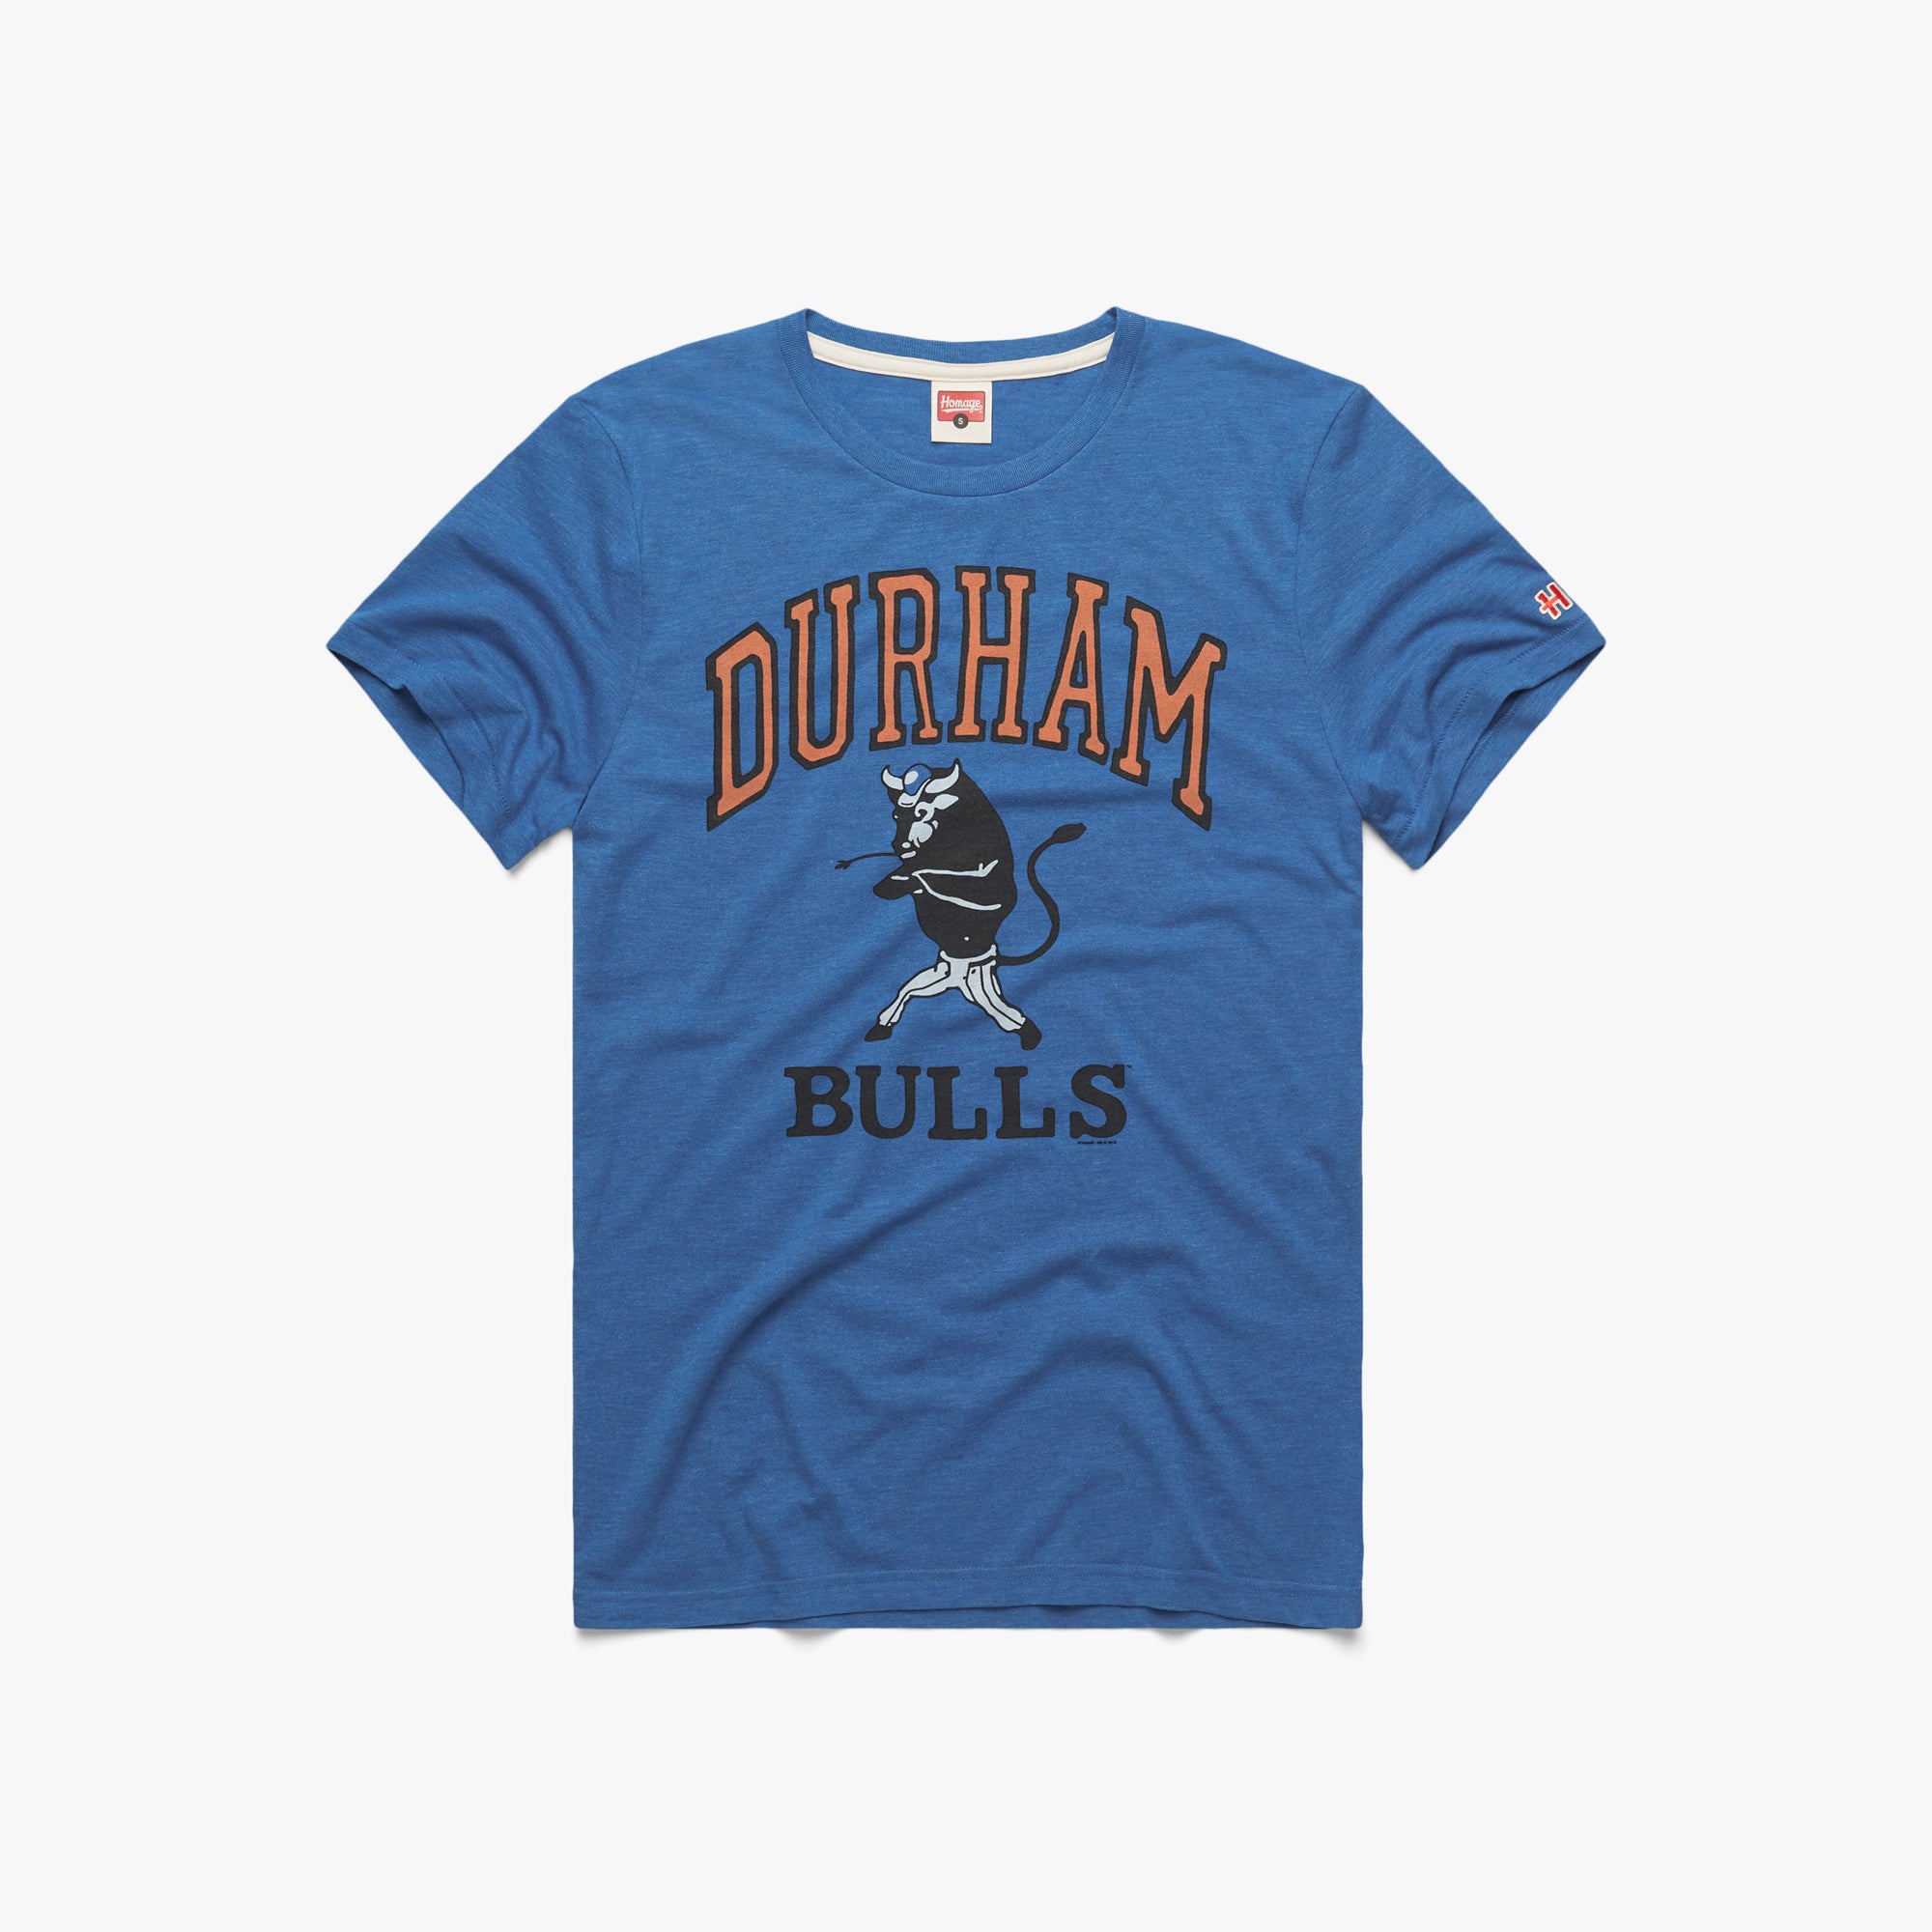 Bulls-Durham Classic T-Shirt Sticker for Sale by DanielleWalk